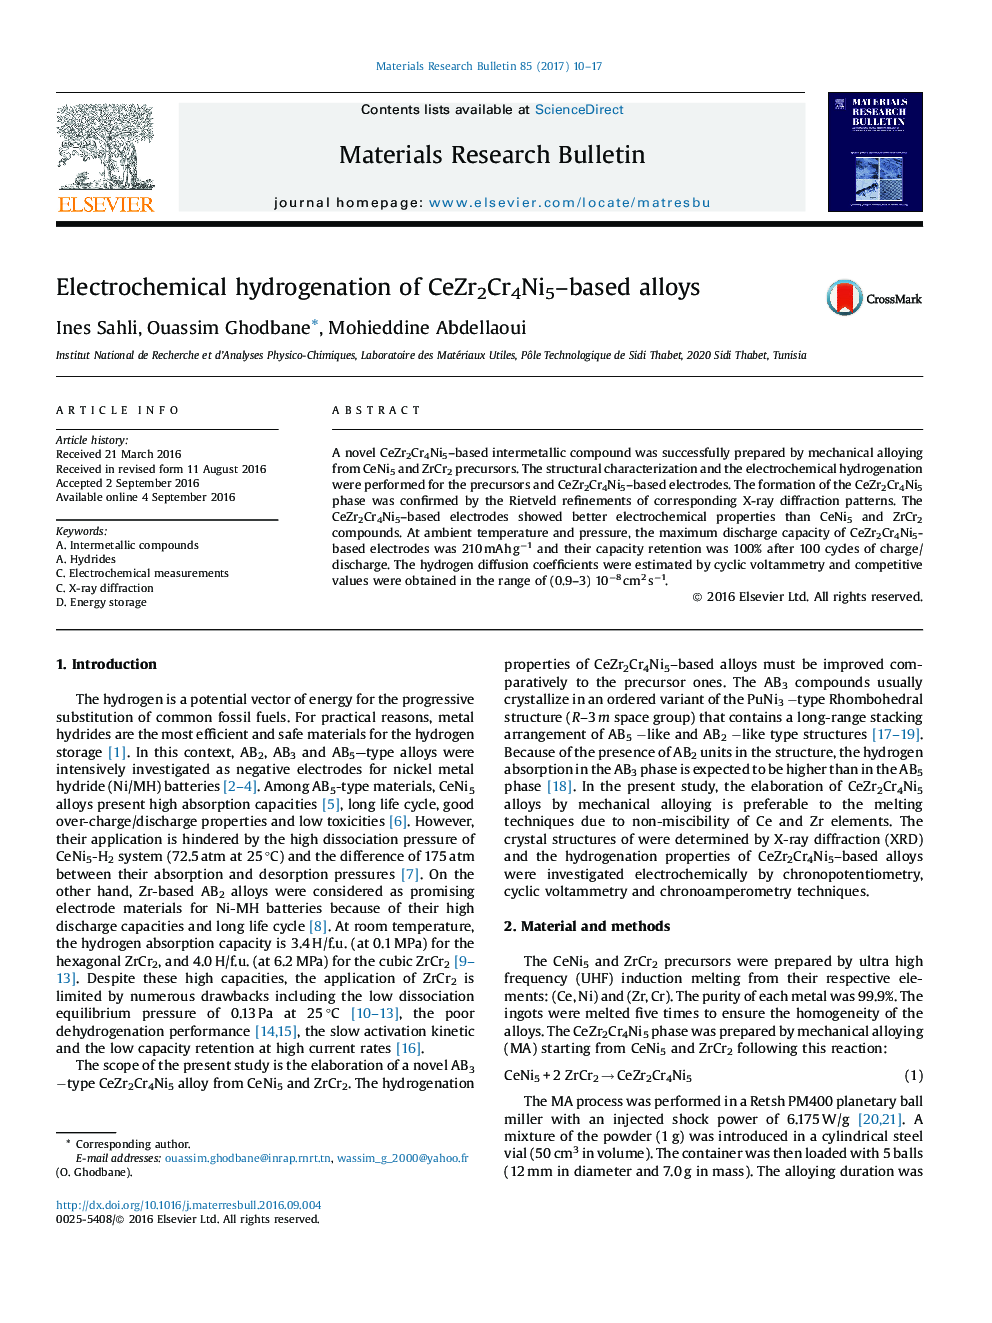 Electrochemical hydrogenation of CeZr2Cr4Ni5-based alloys